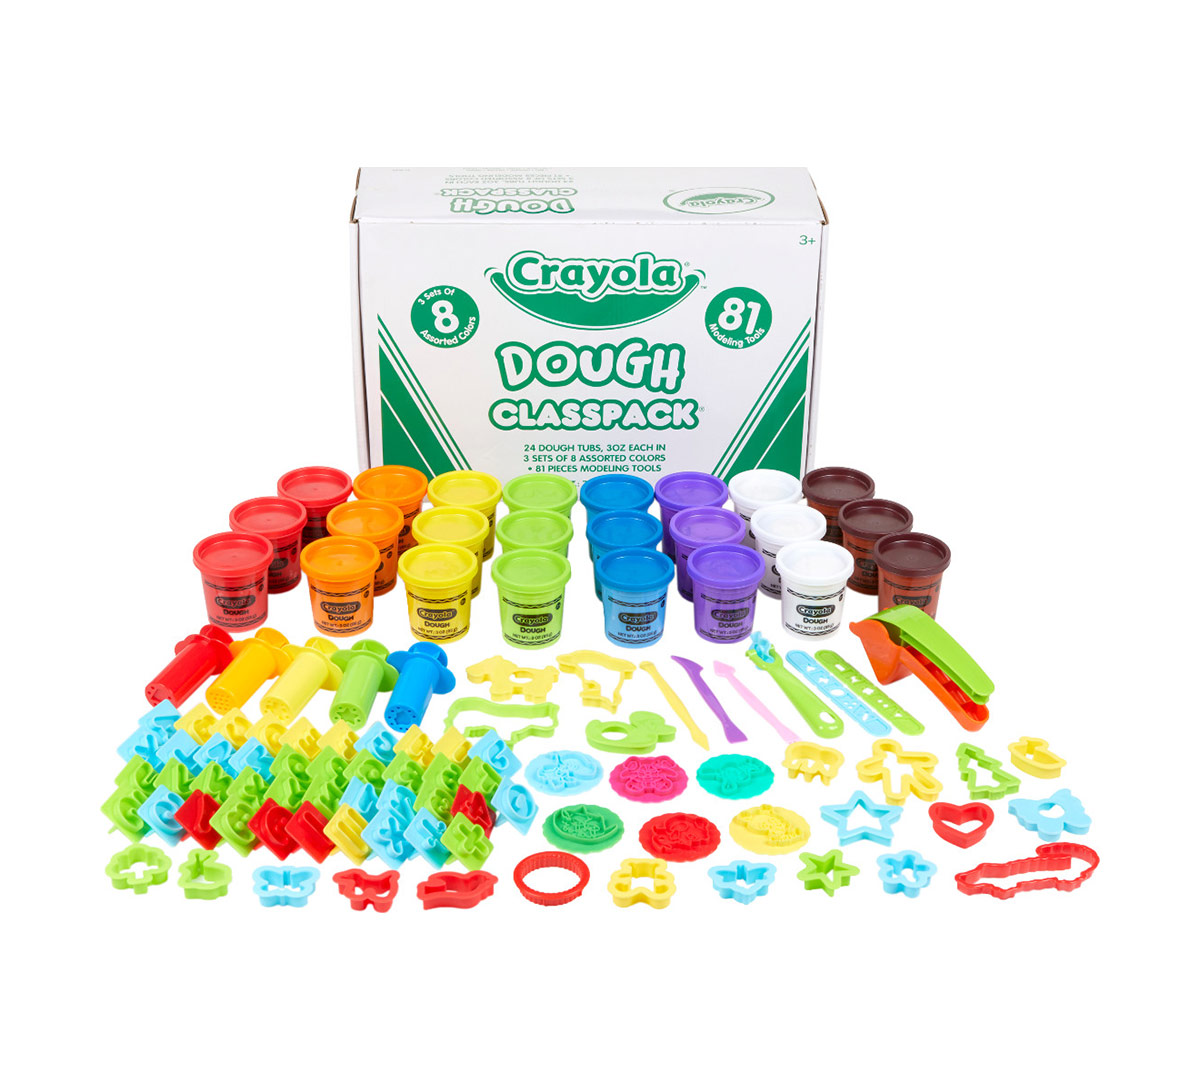 Crayola Model Magic Bulk, 75 Count Classpack 